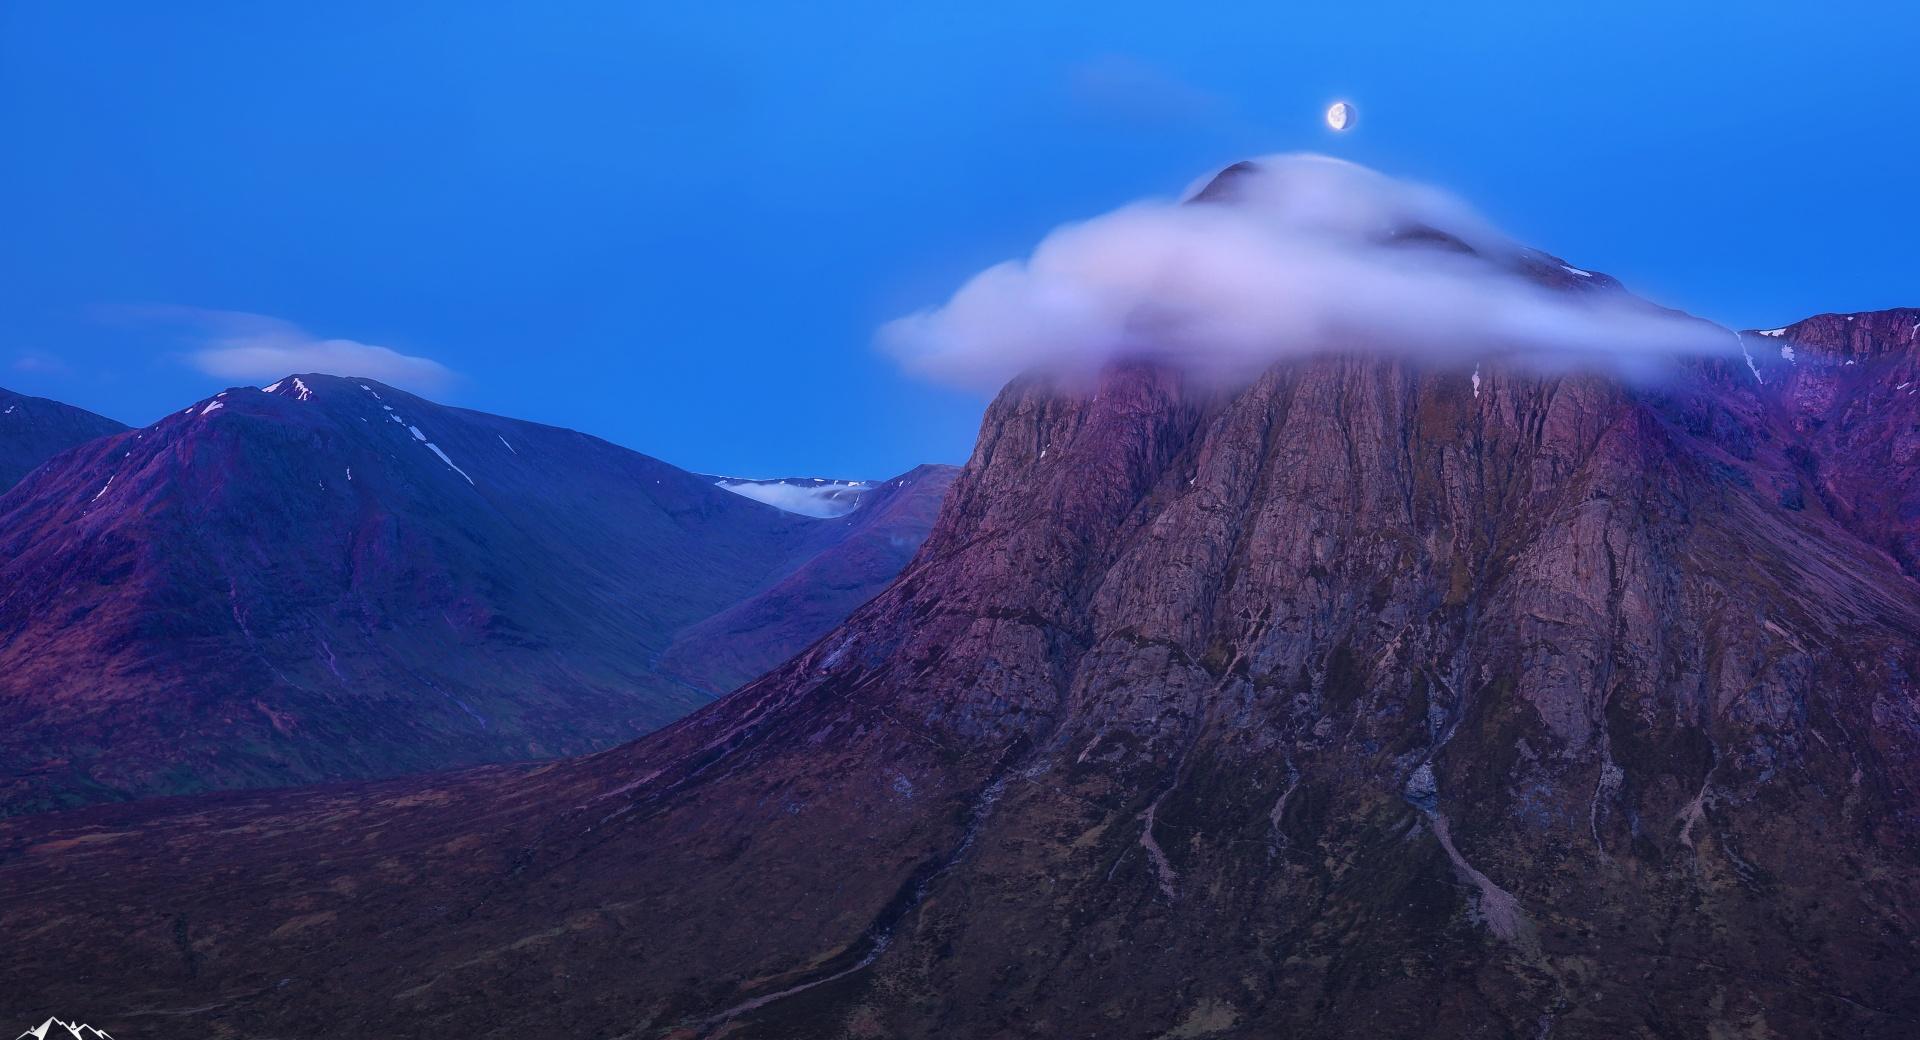 Beinn a Chrulaiste mountain, Scotland at 1024 x 768 size wallpapers HD quality